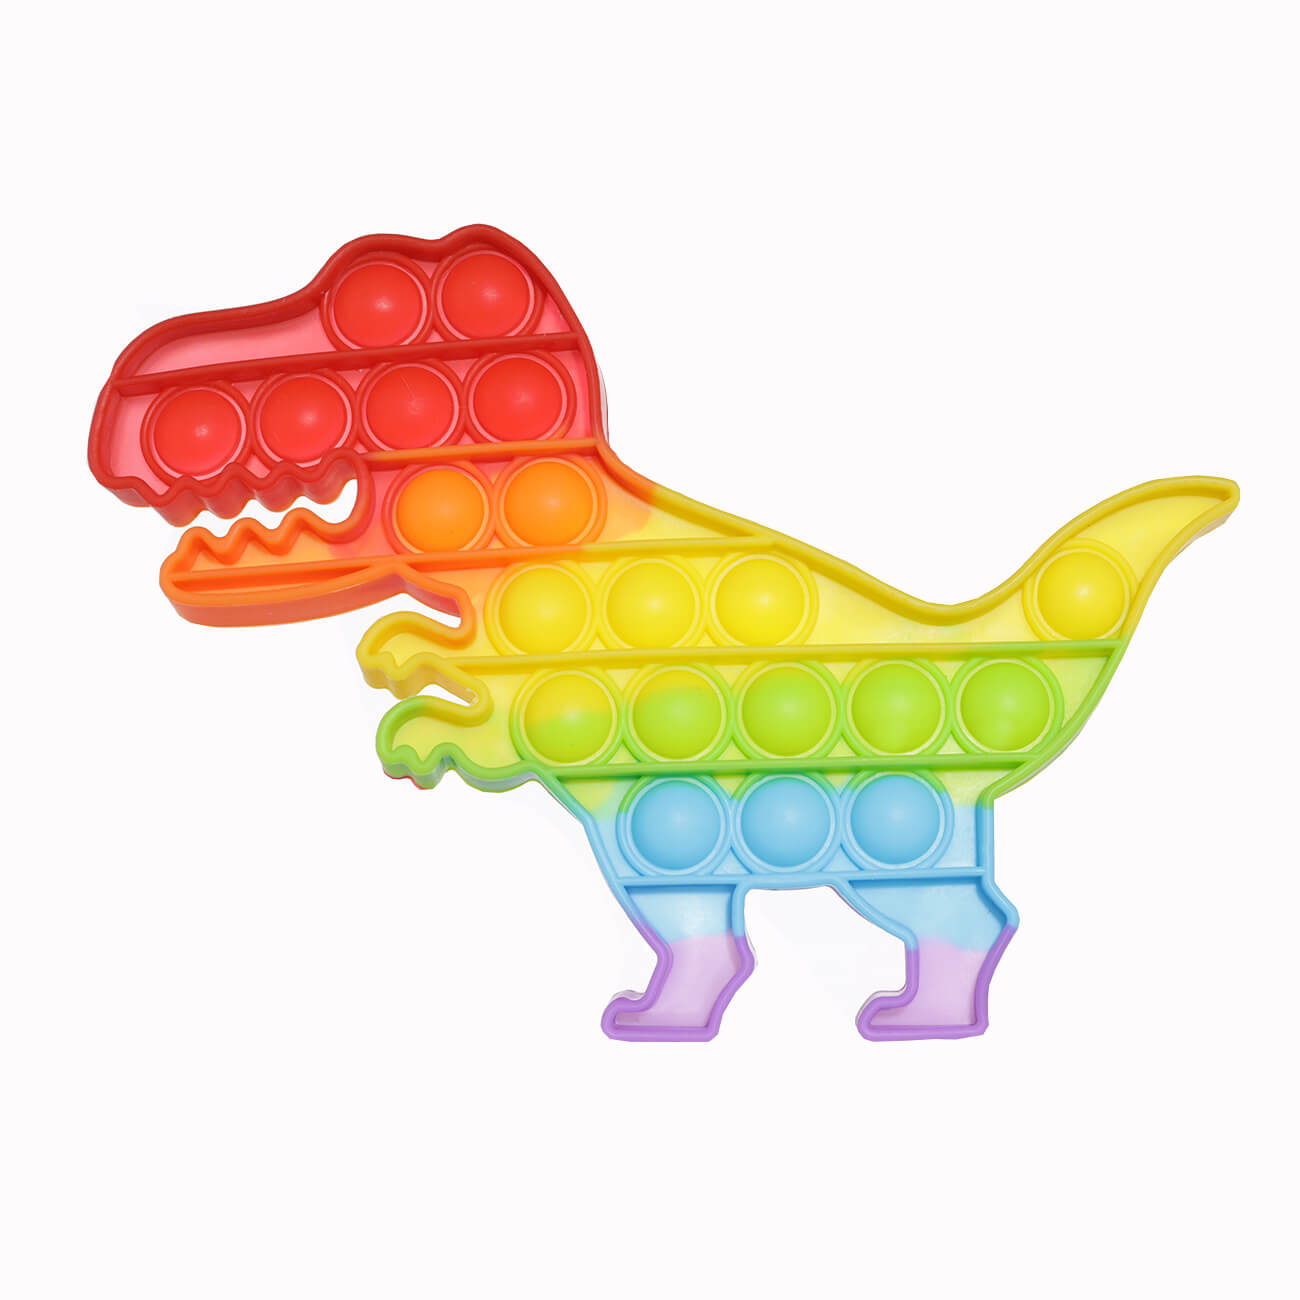 Игрушка-антистресс Pop-it, 19х14 см, силикон, цветная, Динозавр, Pop-it игрушка антистресс spinner squidopop 6 см силикон цветная squidopop